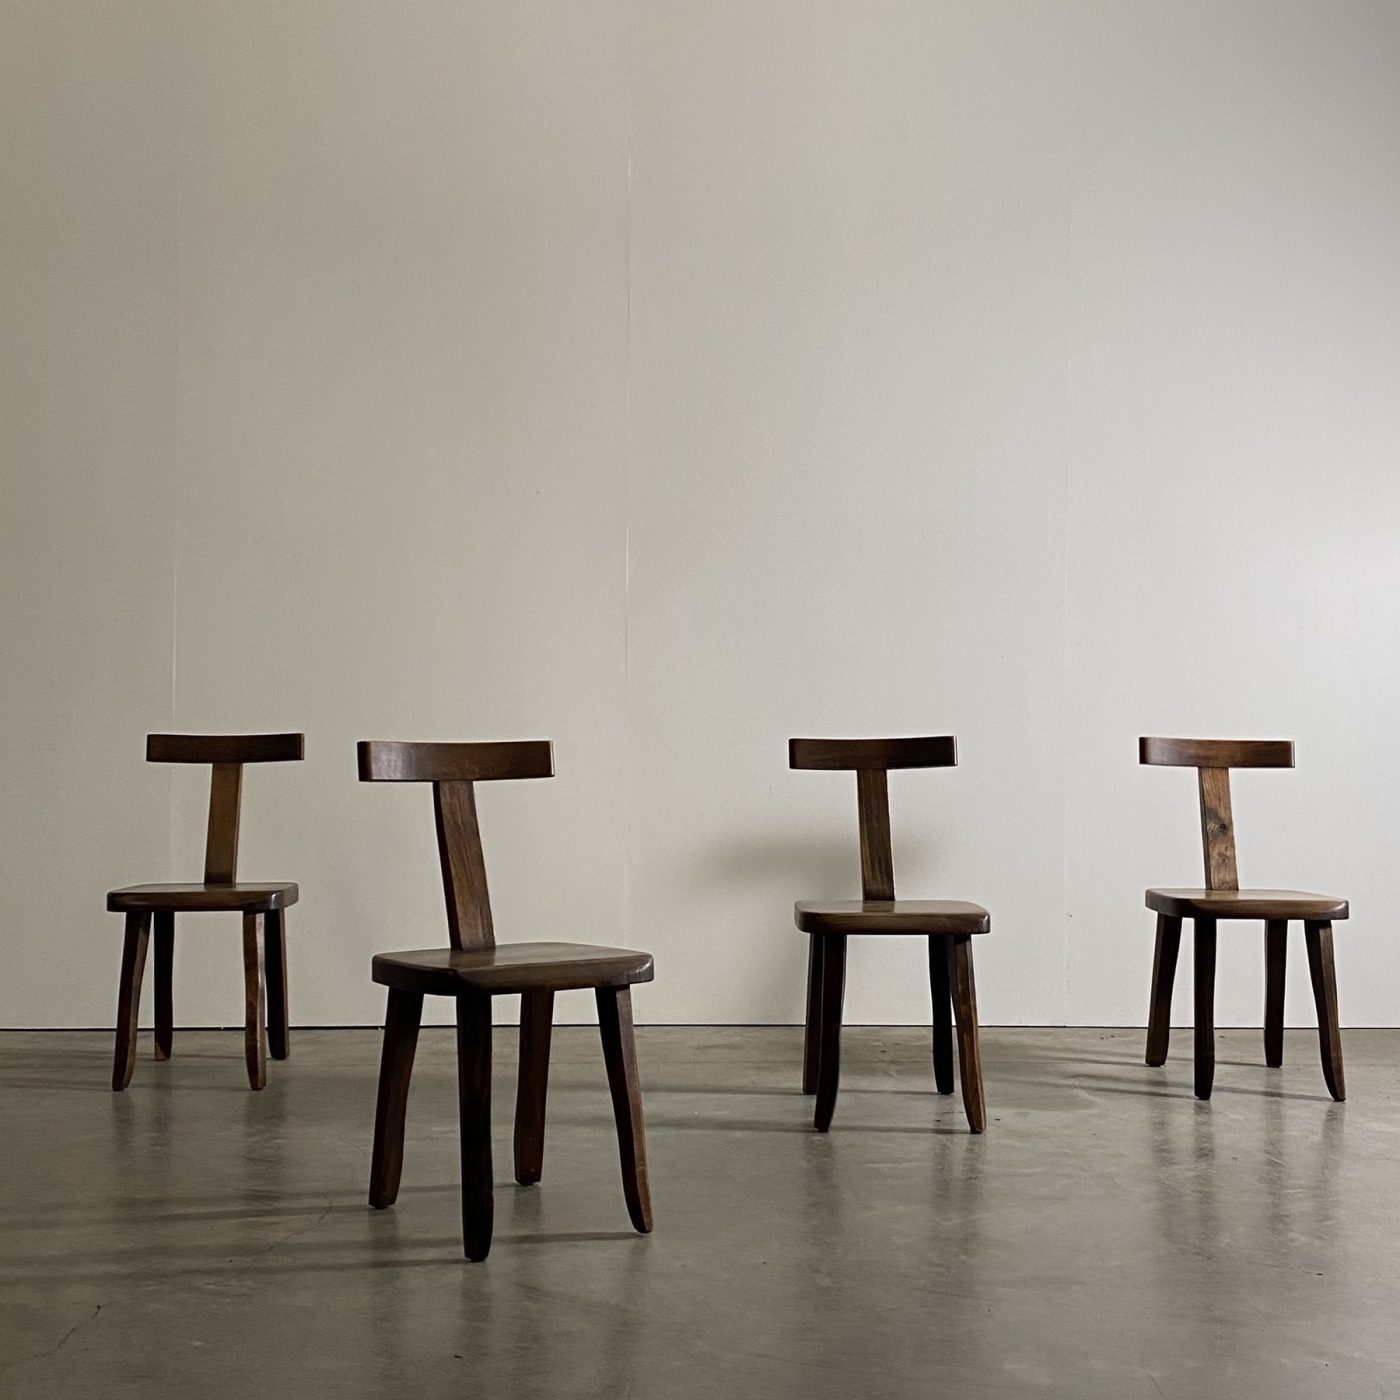 objet-vagabond-hanninen-chairs0002